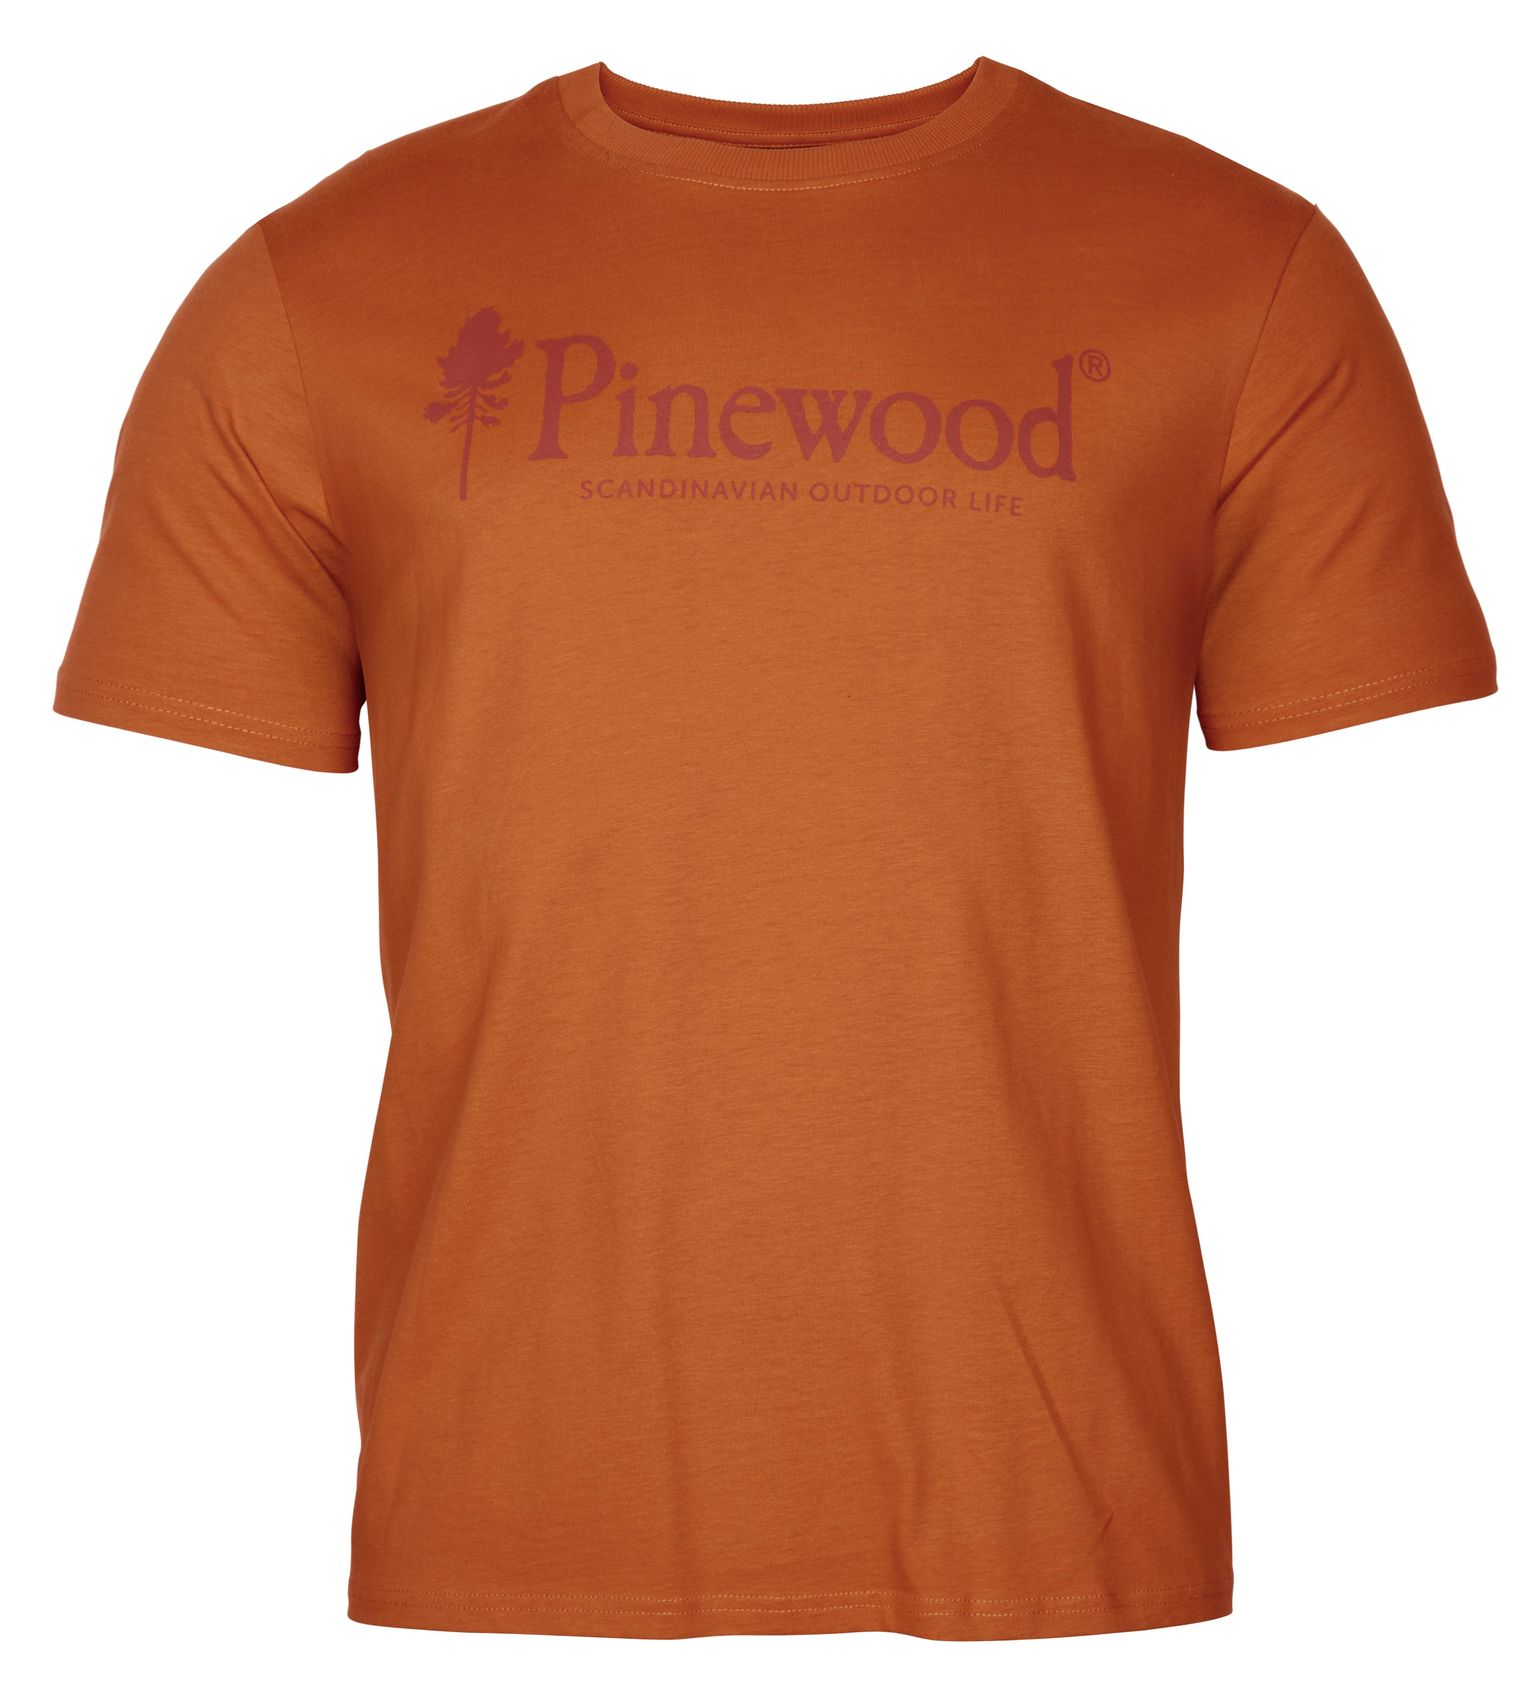 Pinewood Men's Outdoor Life T-shirt Burned Orange